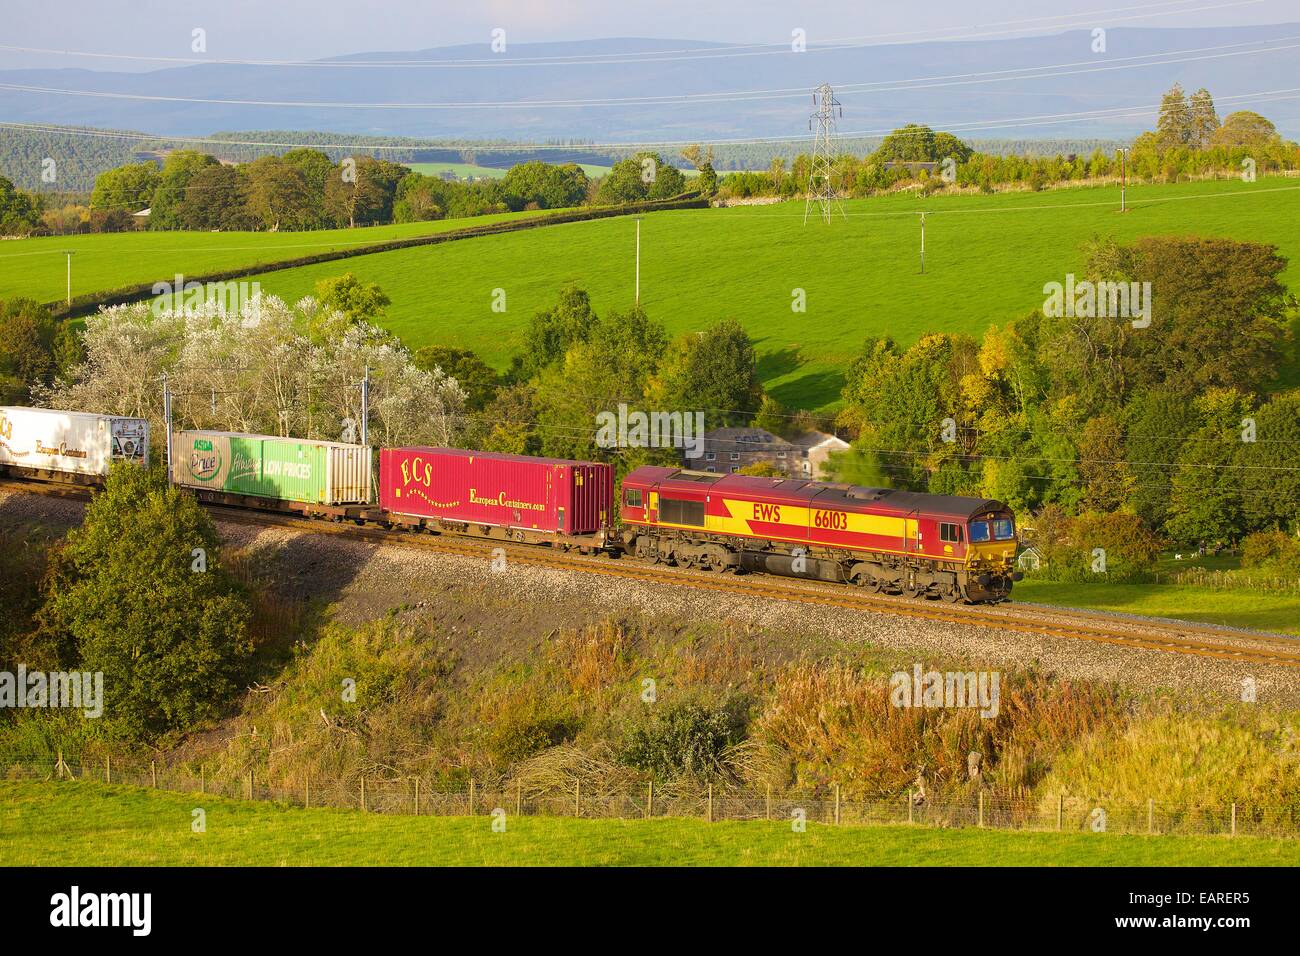 EWS freight train passing Strickland Mill, Great Strickland, Cumbria, West Coast Main Line, England, UK. Stock Photo